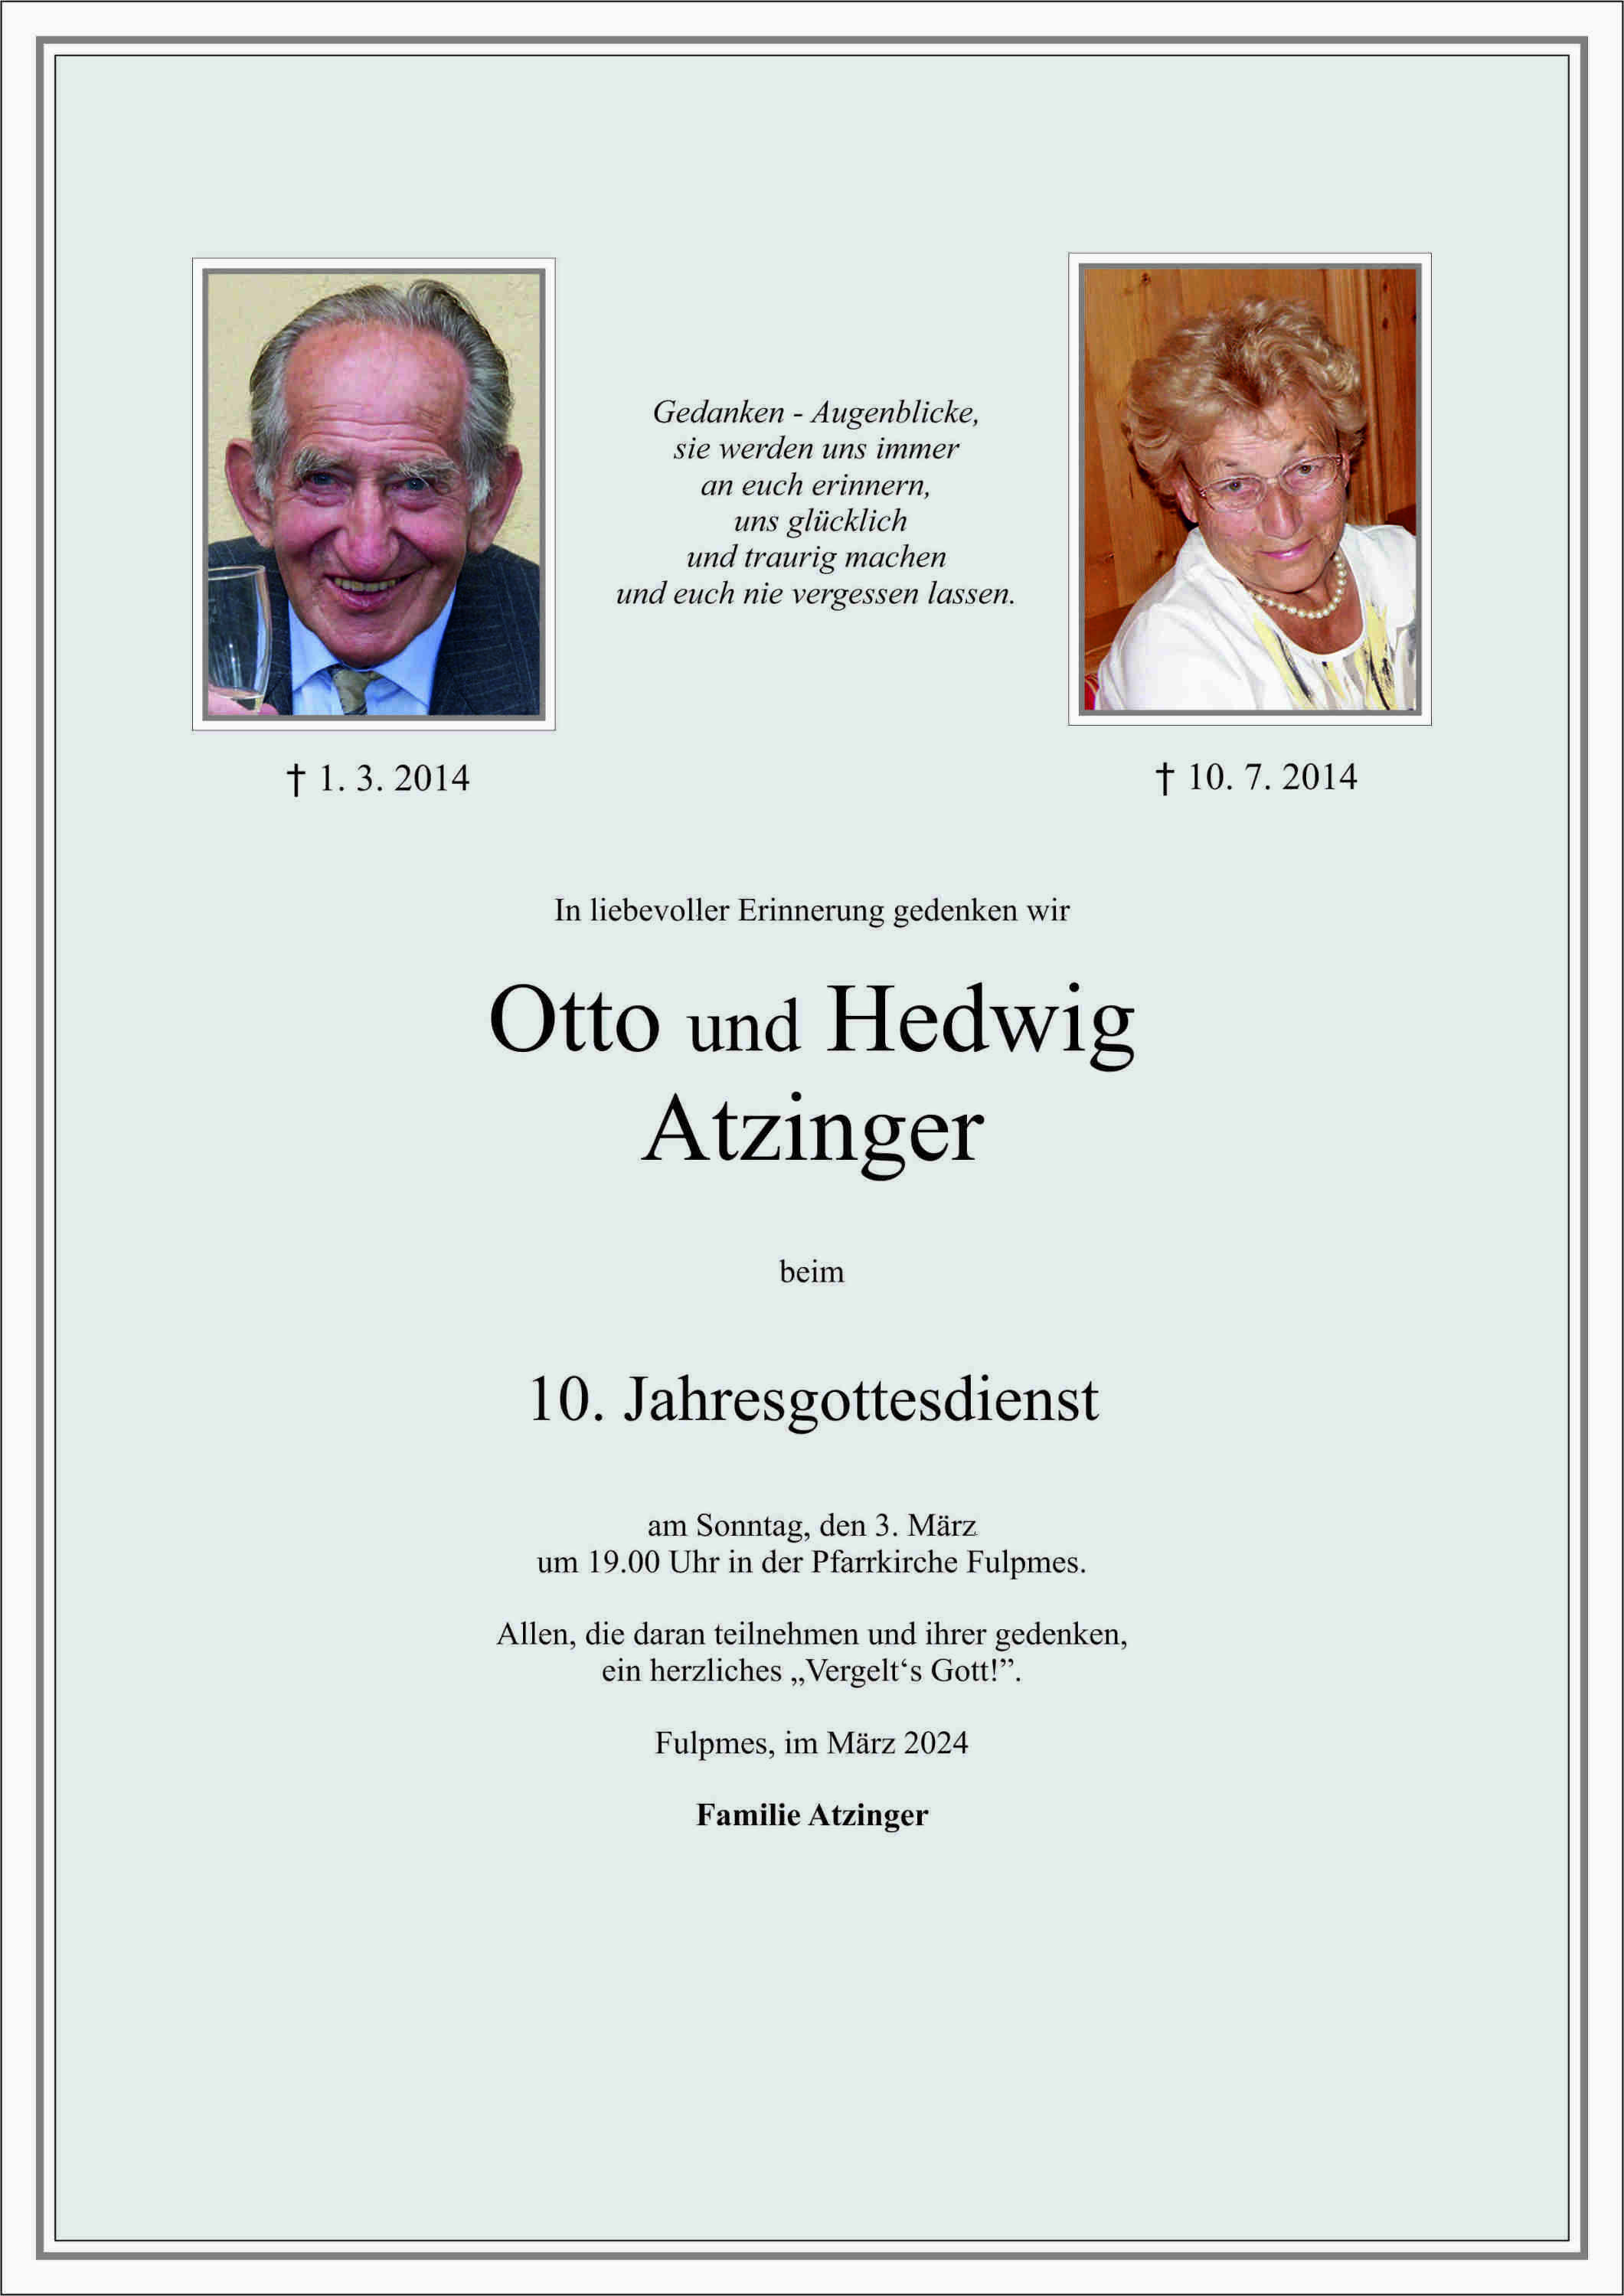 Hedwig Atzinger